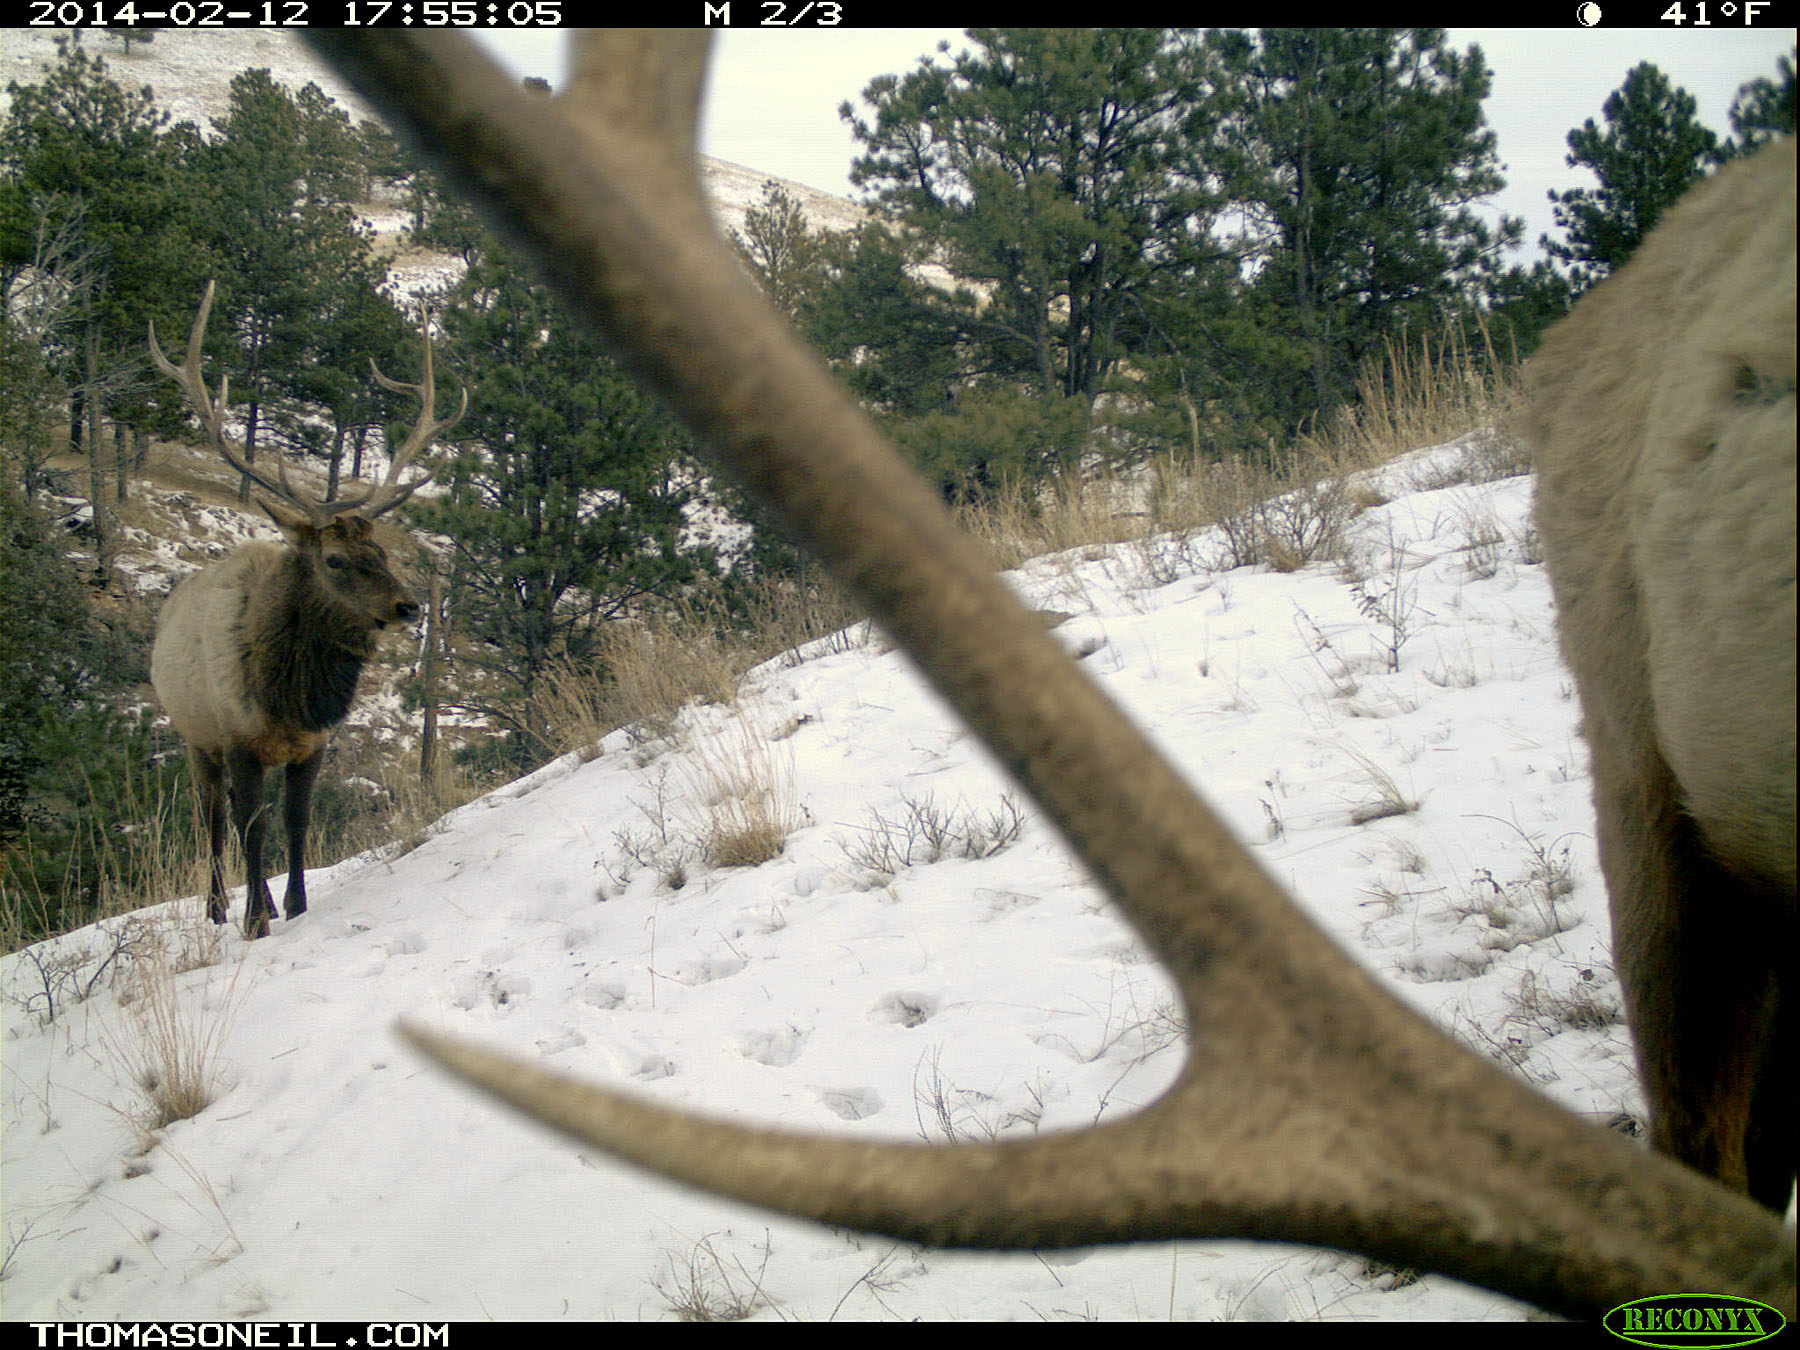 Elk on trail camera, Wind Cave National Park, South Dakota, Feb. 12, 2014.  Click for next photo.